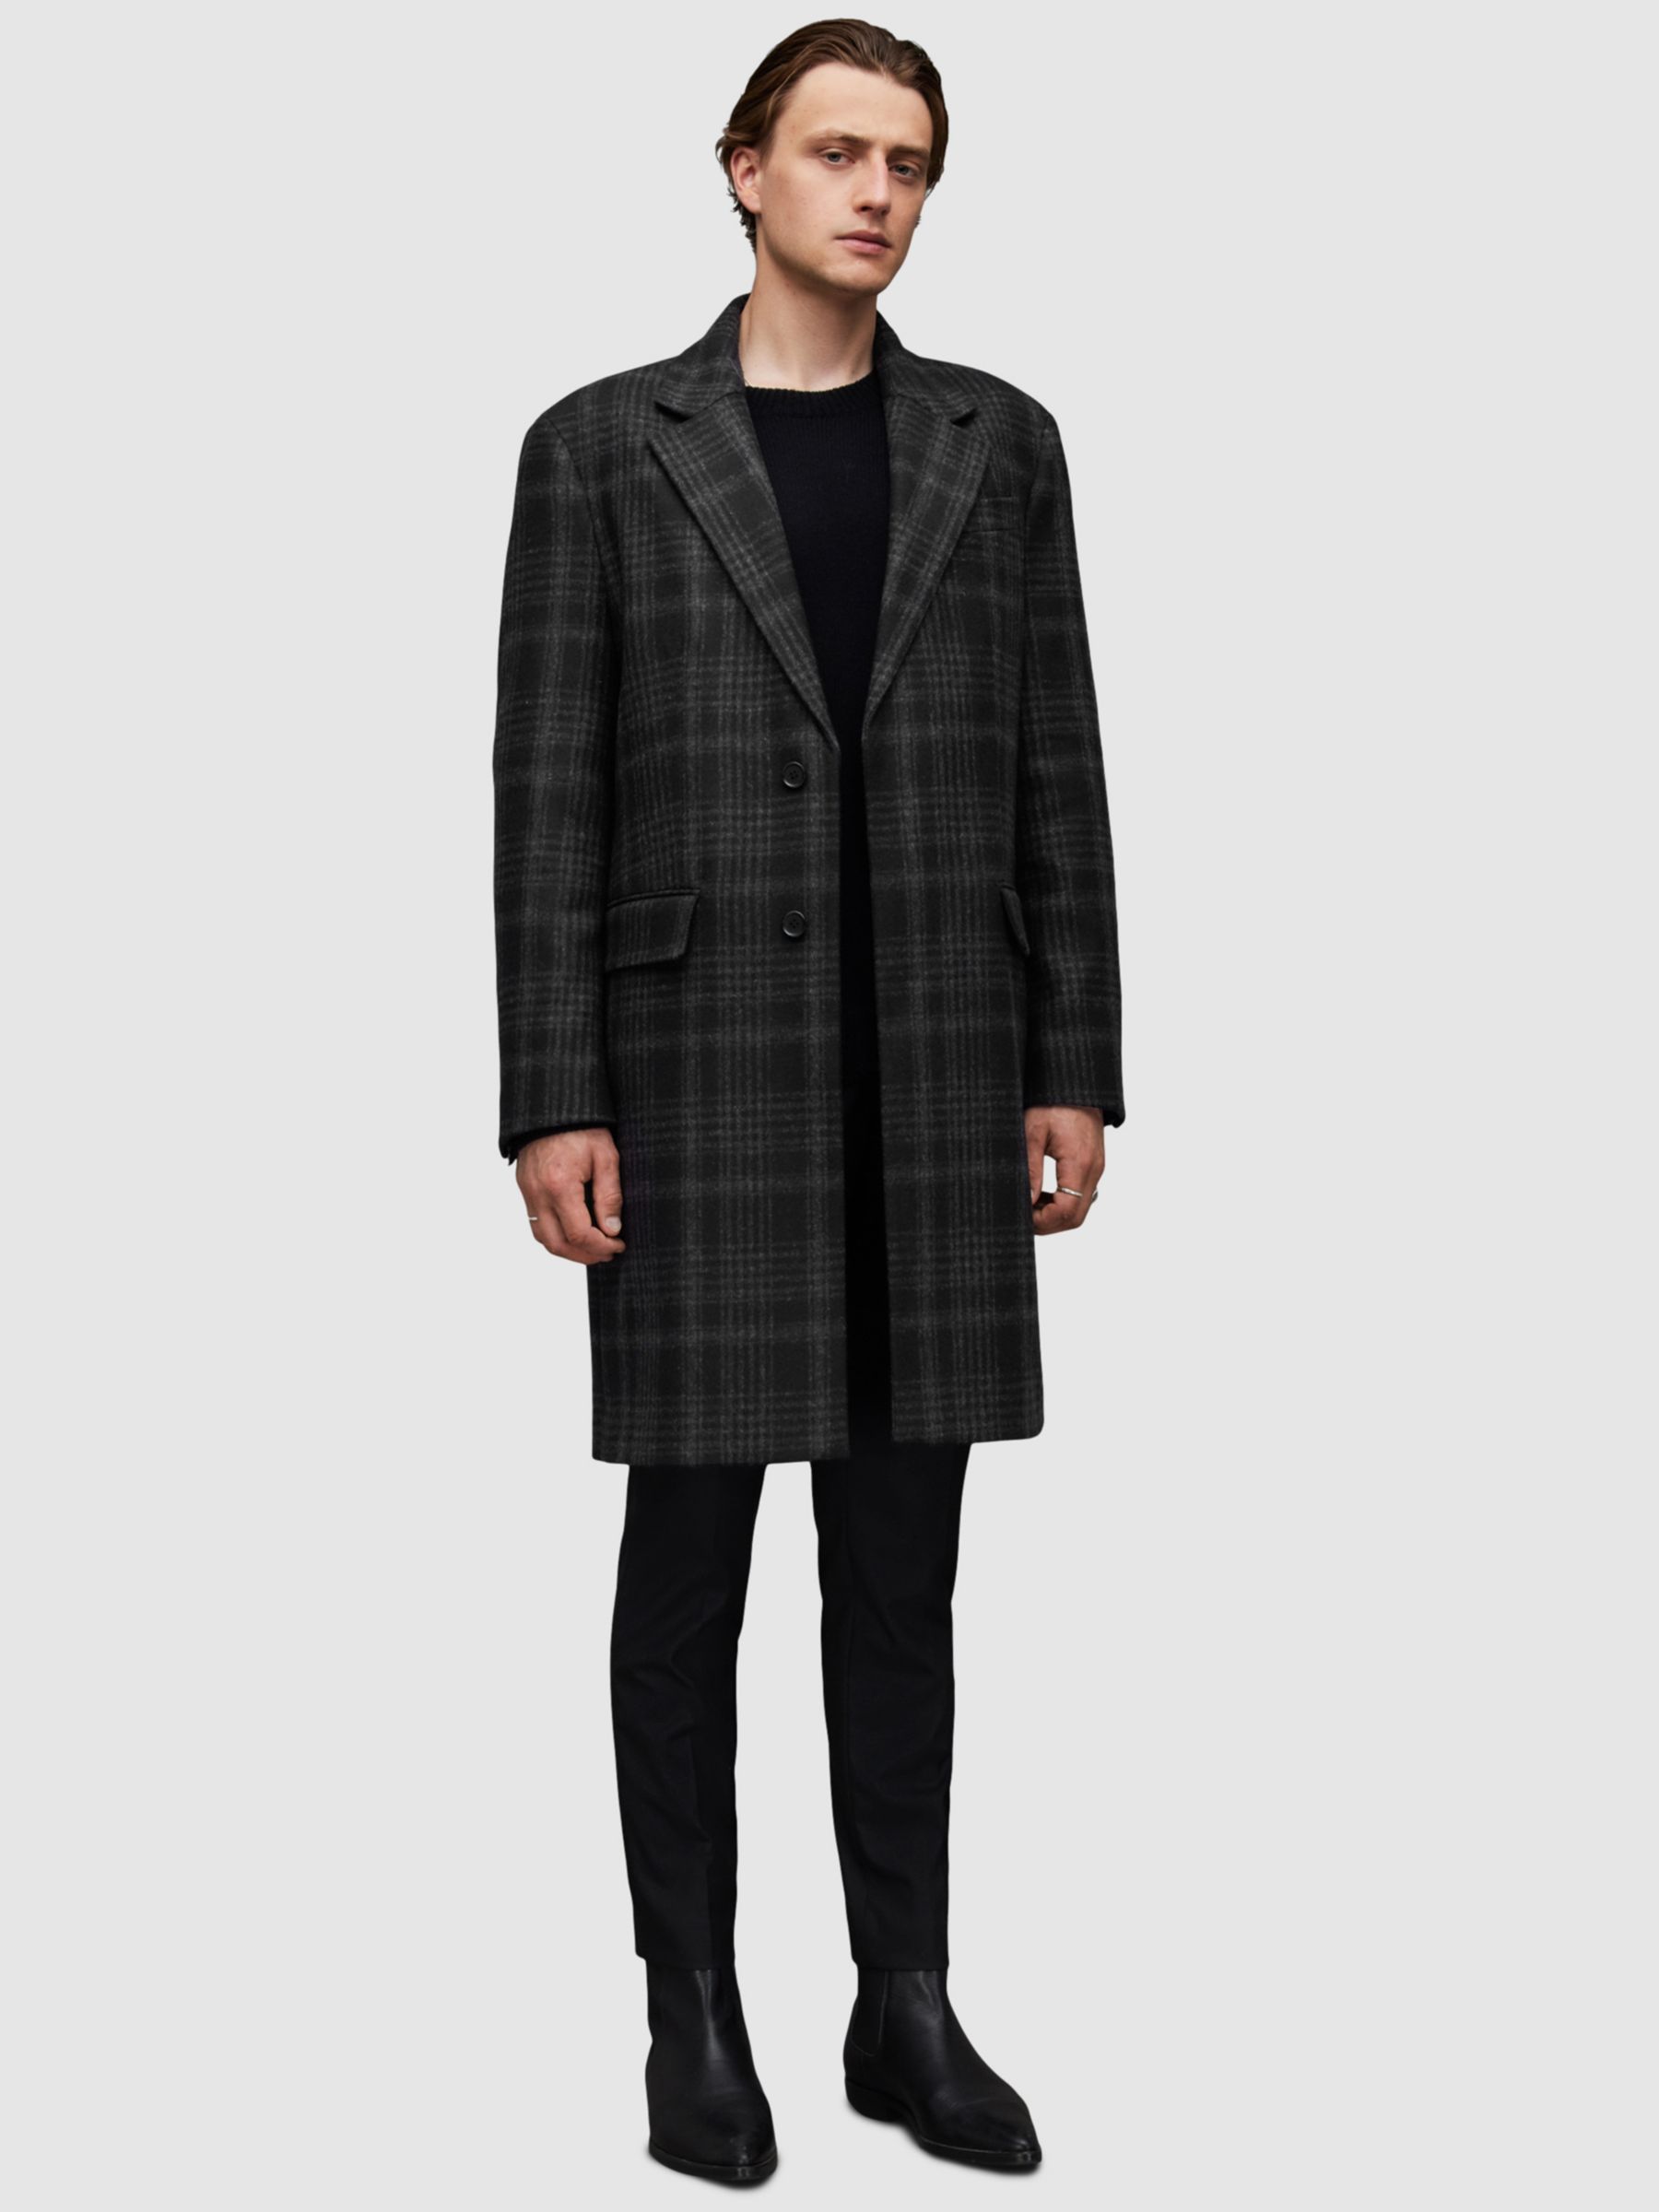 AllSaints Sargas Wool Blend Checked Coat, Black/Grey, 44R